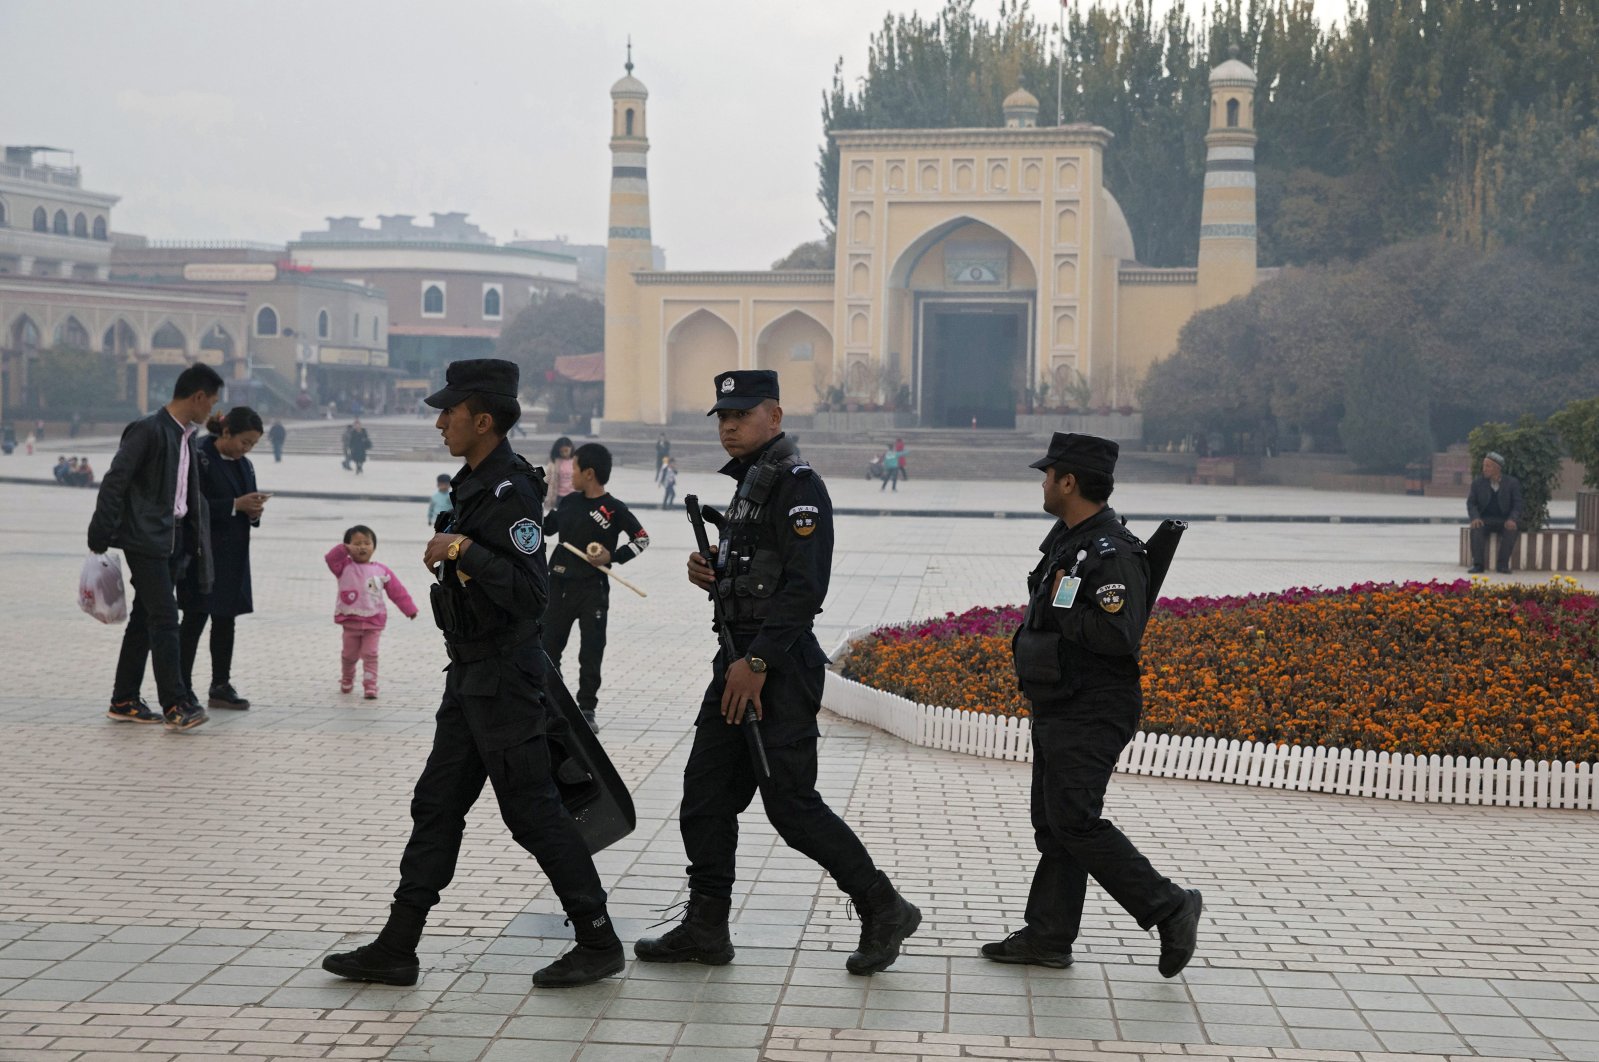 Uighur security personnel patrol near the Id Kah Mosque in Kashgar in western China's Xinjiang region, Nov. 4, 2017. (AP Photo)